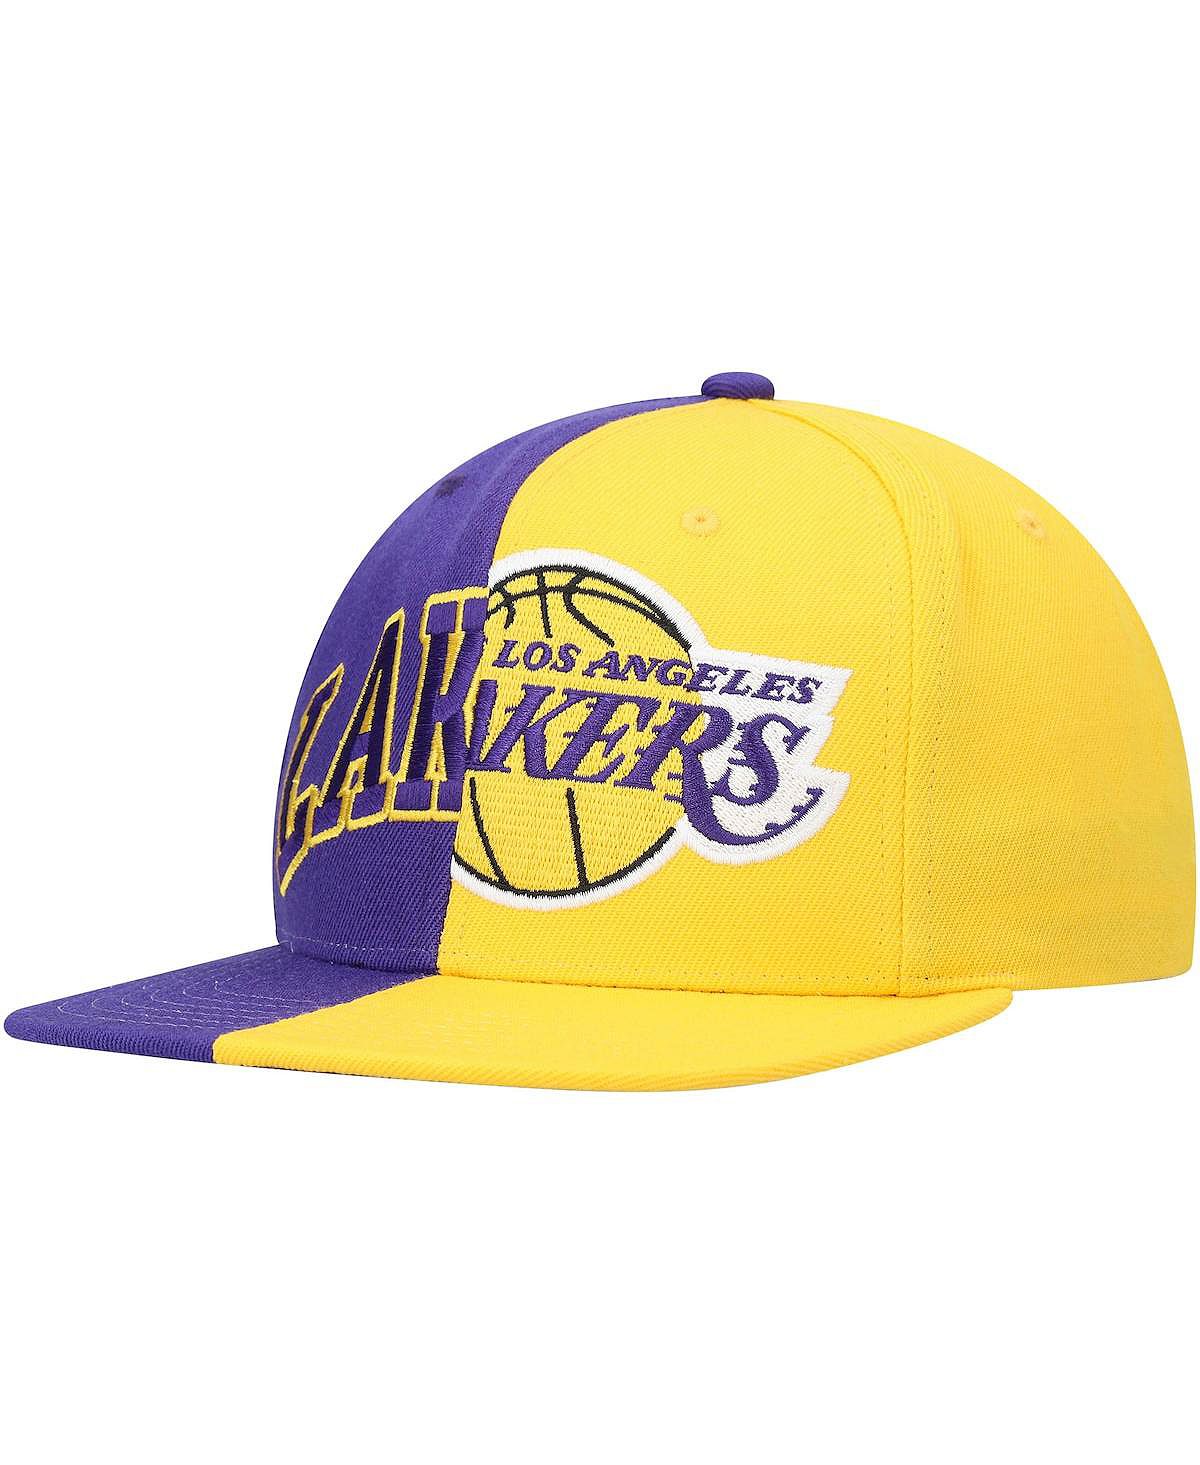 Мужская фиолетово-золотая кепка Los Angeles Lakers Half and Half Snapback Mitchell & Ness